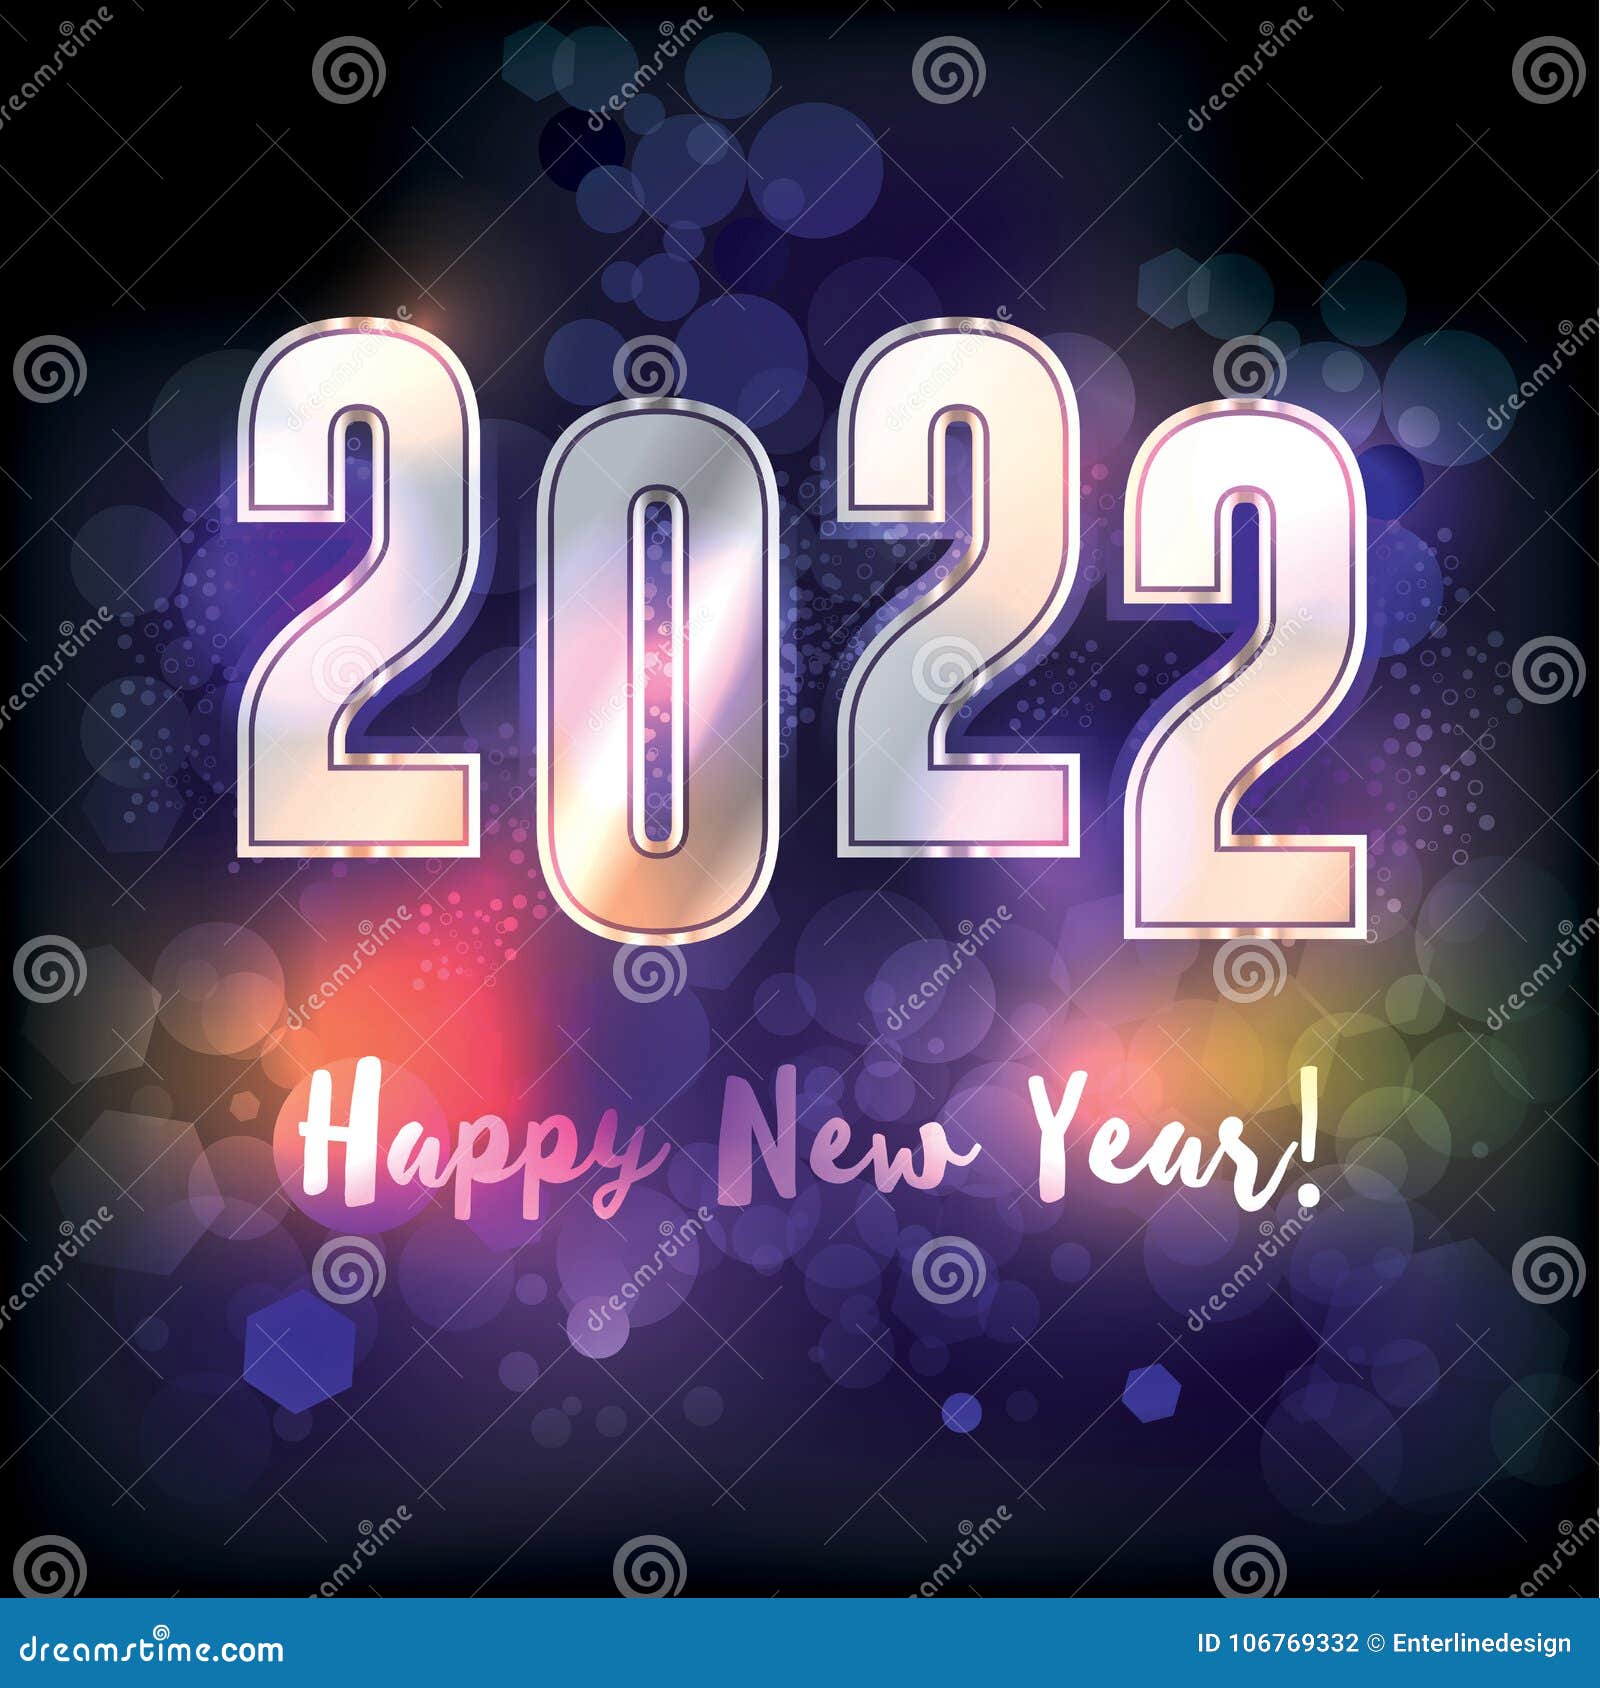 Happy New Year 2022 Illustration Stock Vector